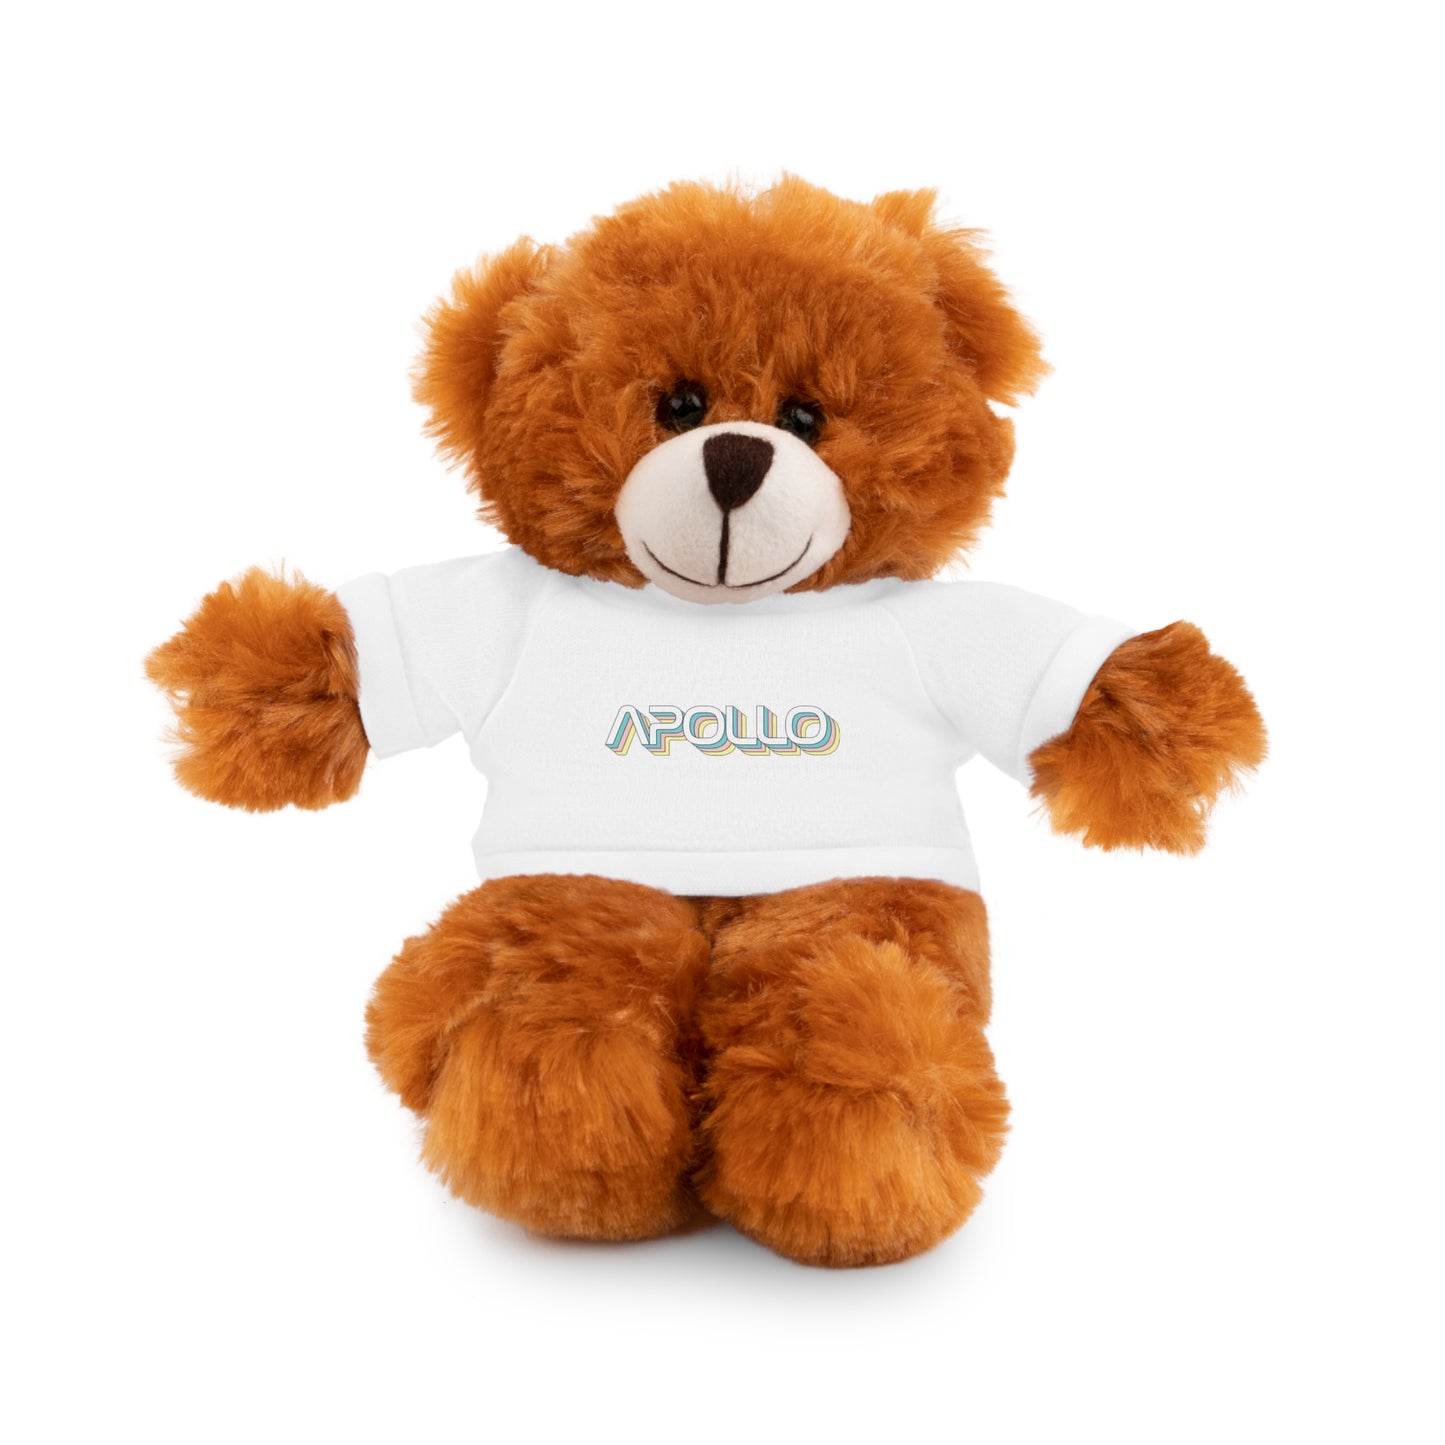 Apollo Pastel Stuffed Animal